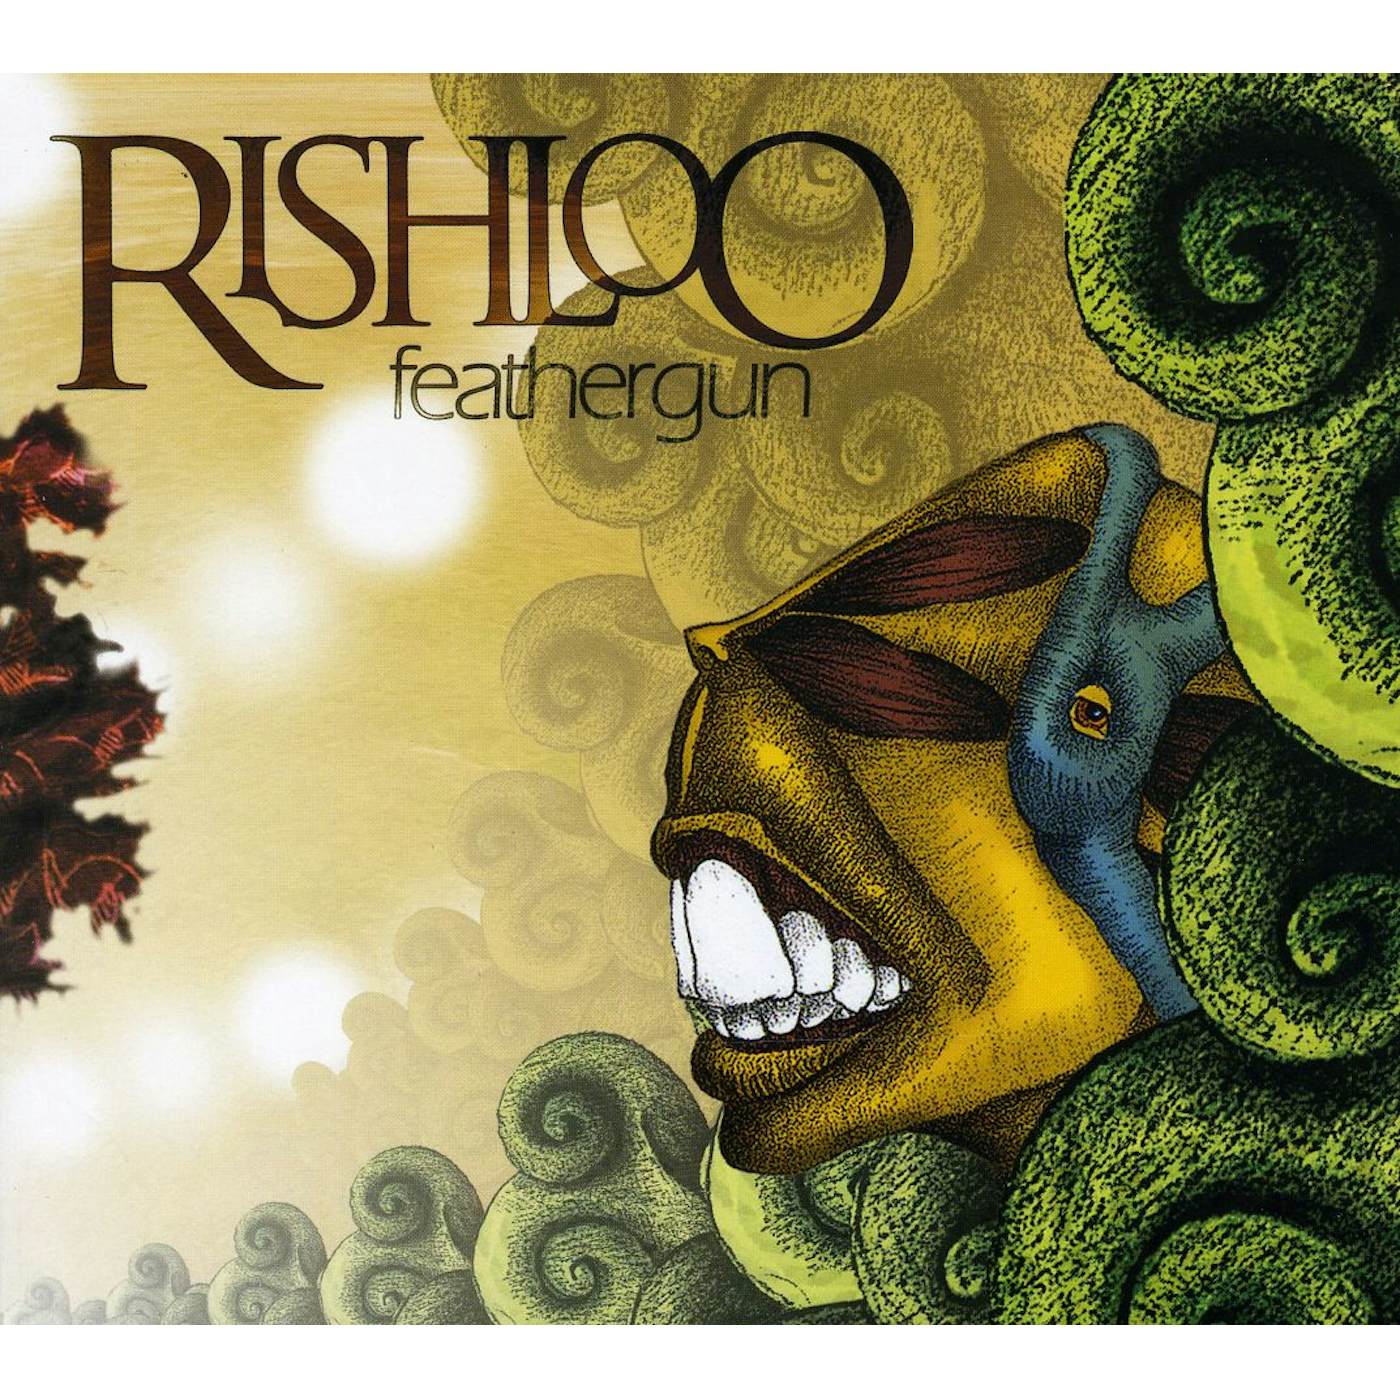 Rishloo FEATHERGUN CD